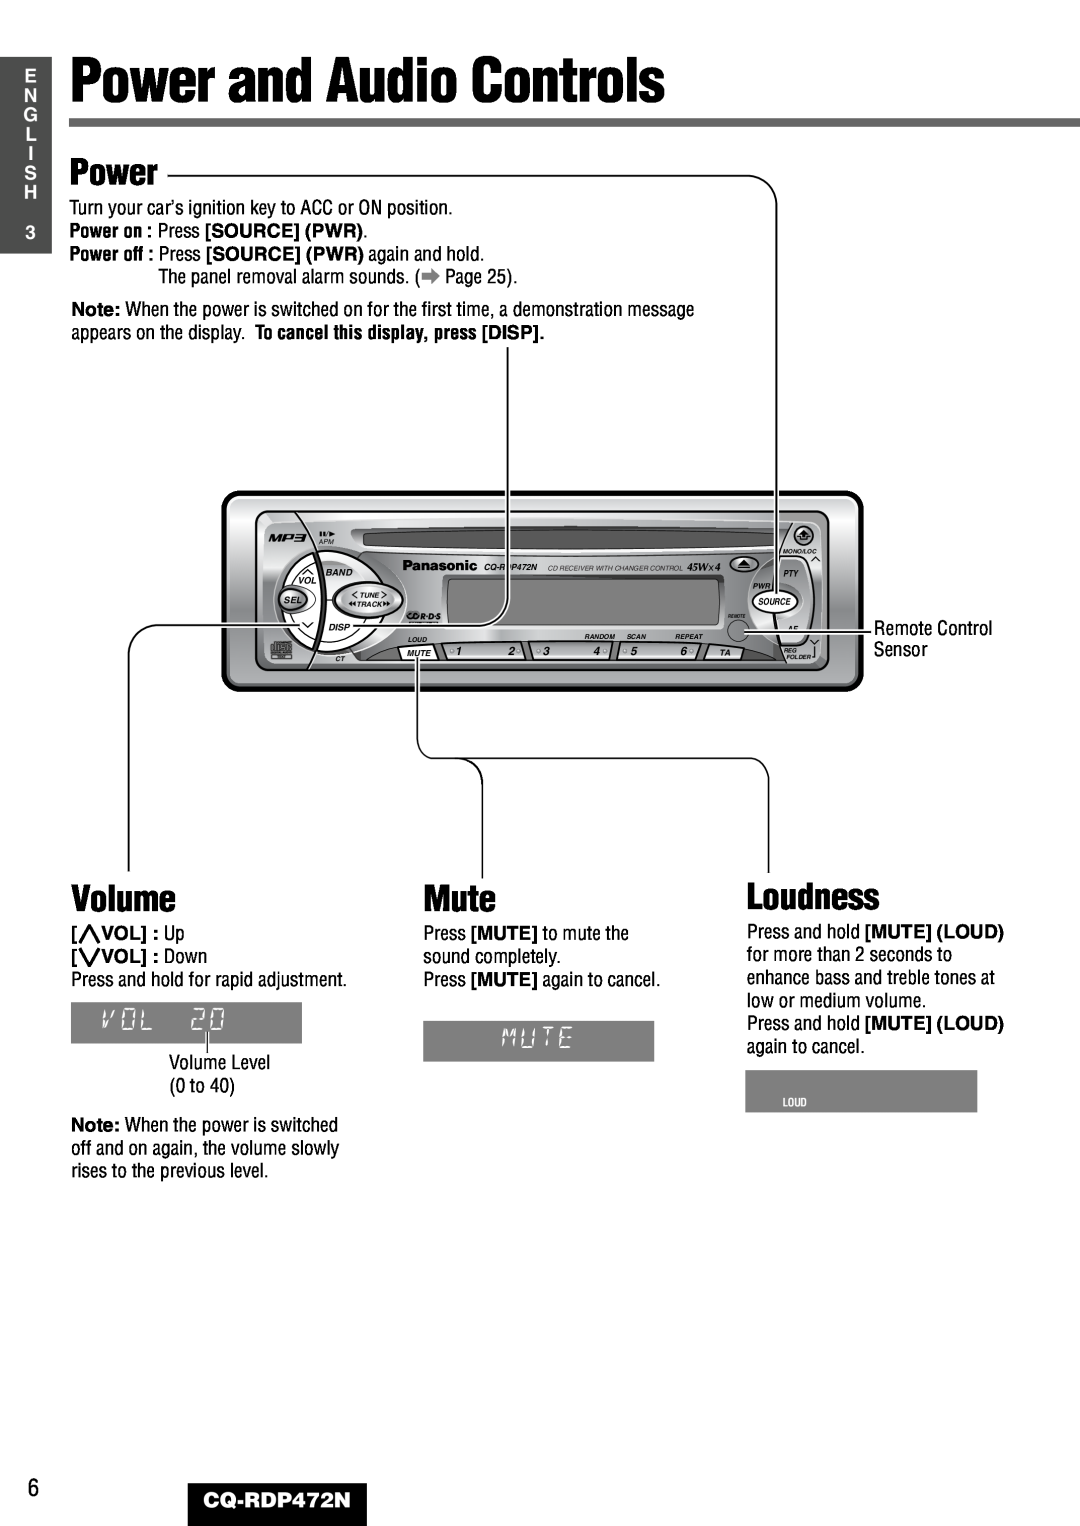 Panasonic CQ-RDP472N manual E Power and Audio Controls, S Power, Volume, Mute, Loudness, 20 ¡ Rs 